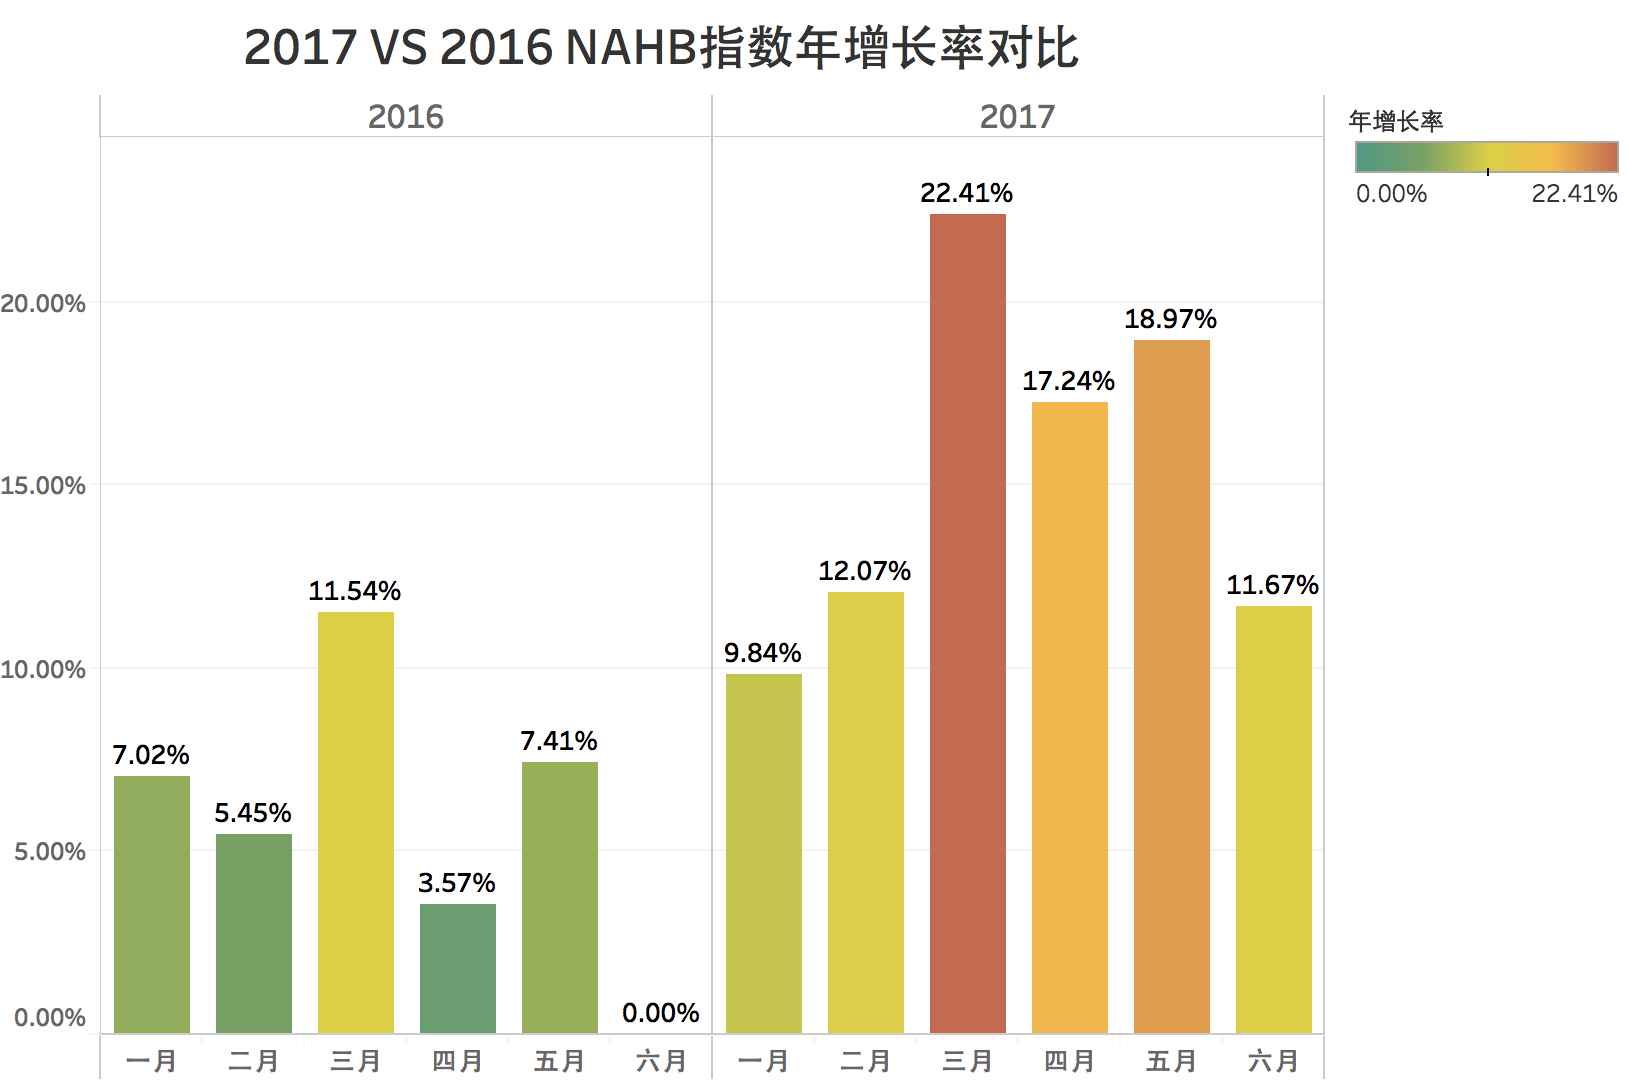 2017 vs 2016 NAHB指数年增长率对比